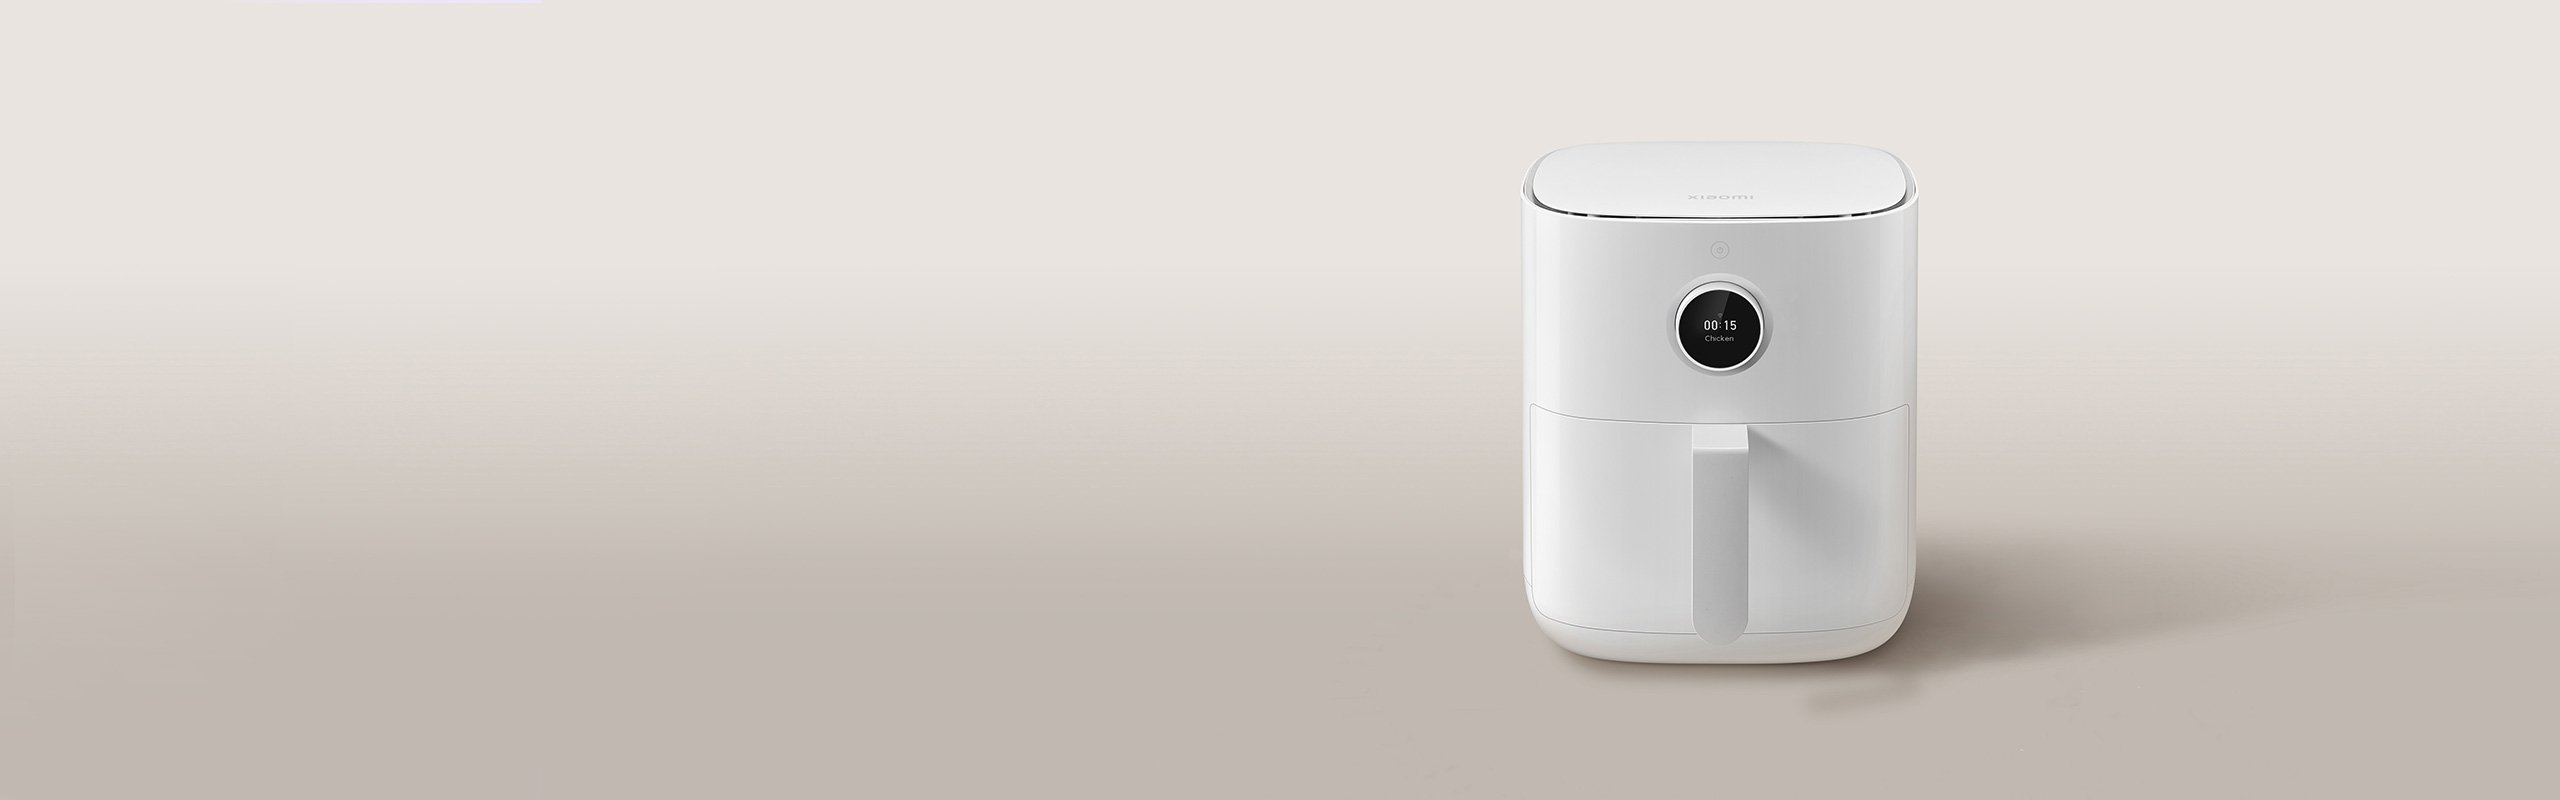 Xiaomi Smart Air Fryer 4.5L